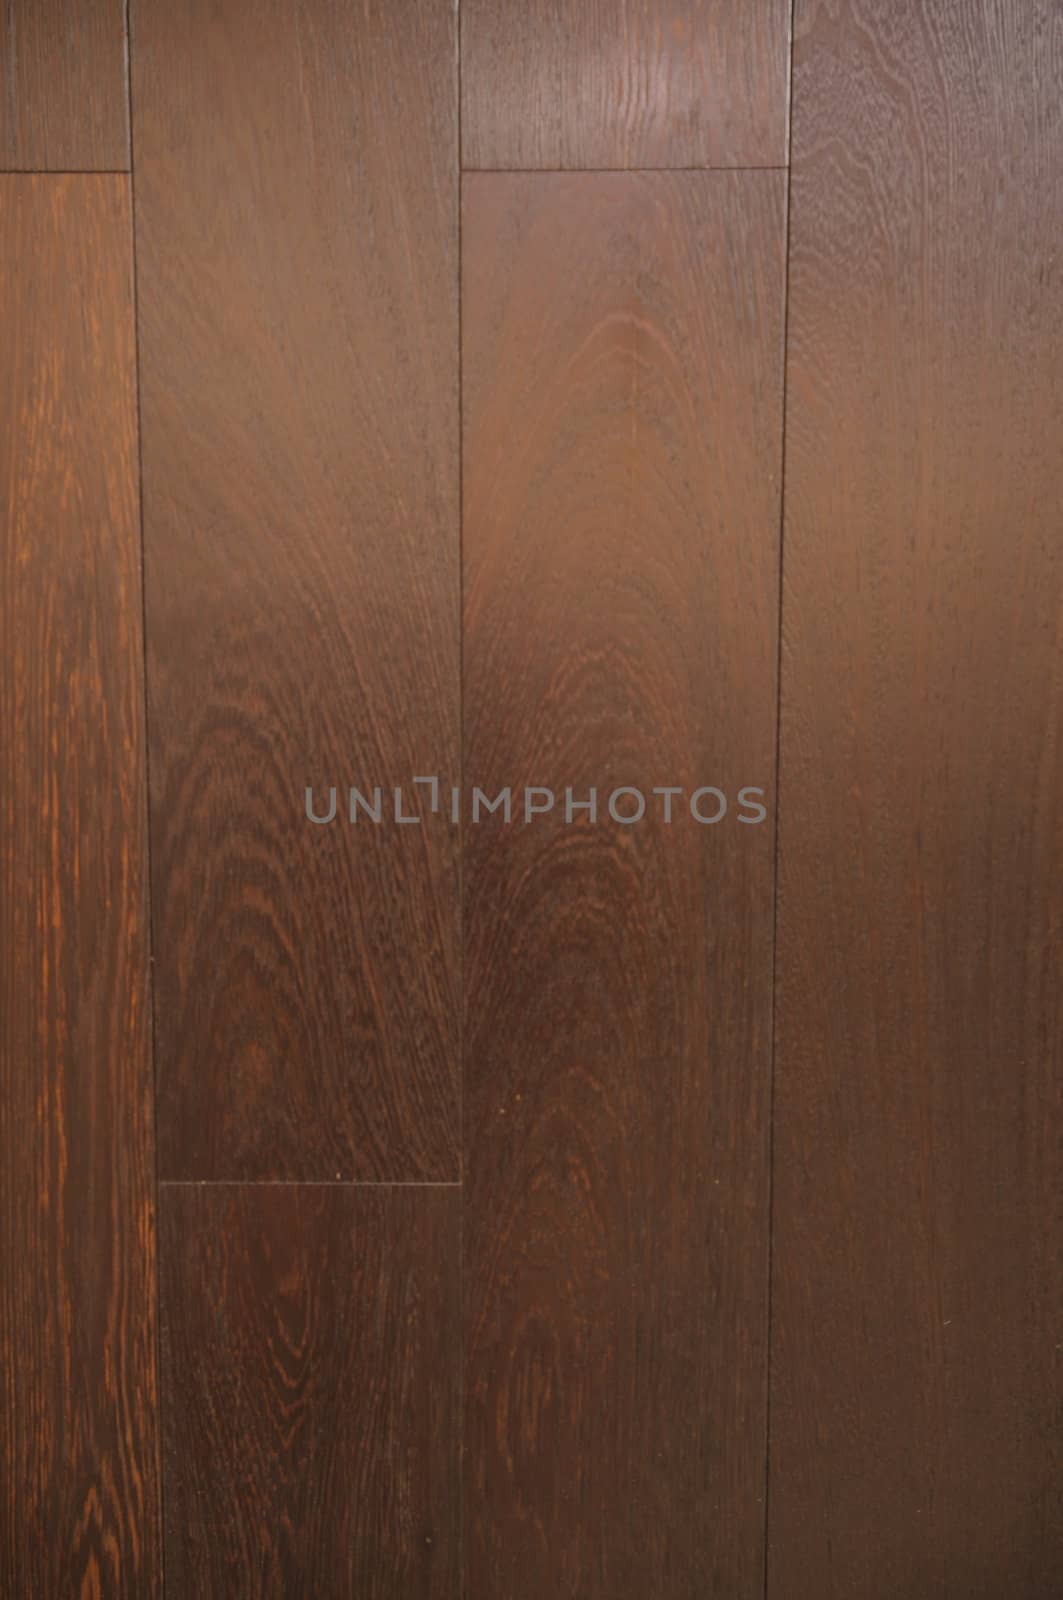 A nice texture of wood plank flooring